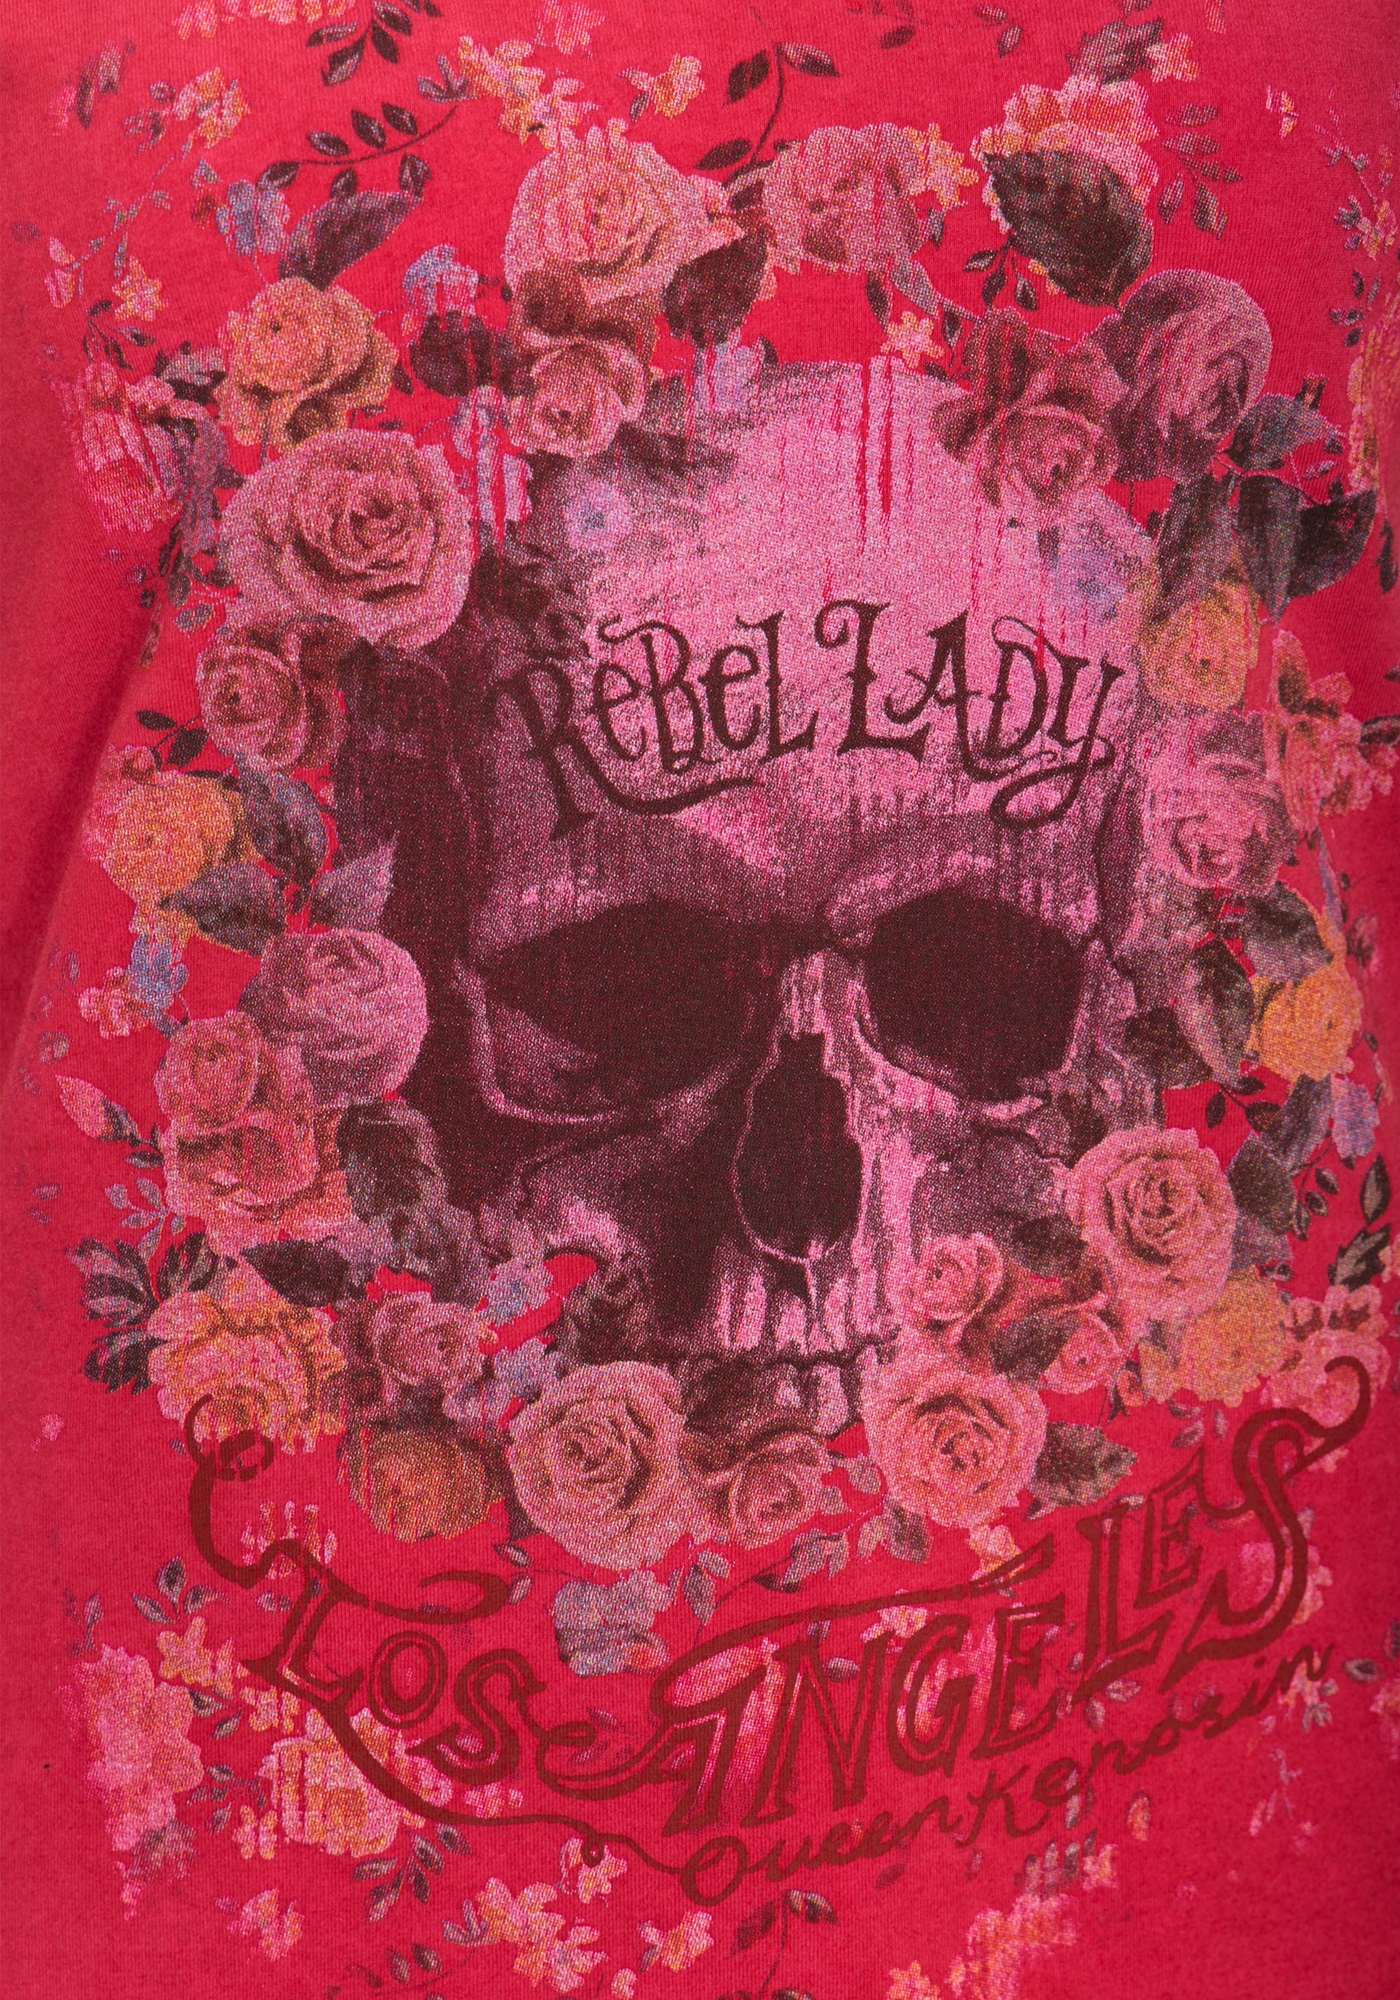 Queen Kerosin T-Shirt - Rebel Lady M